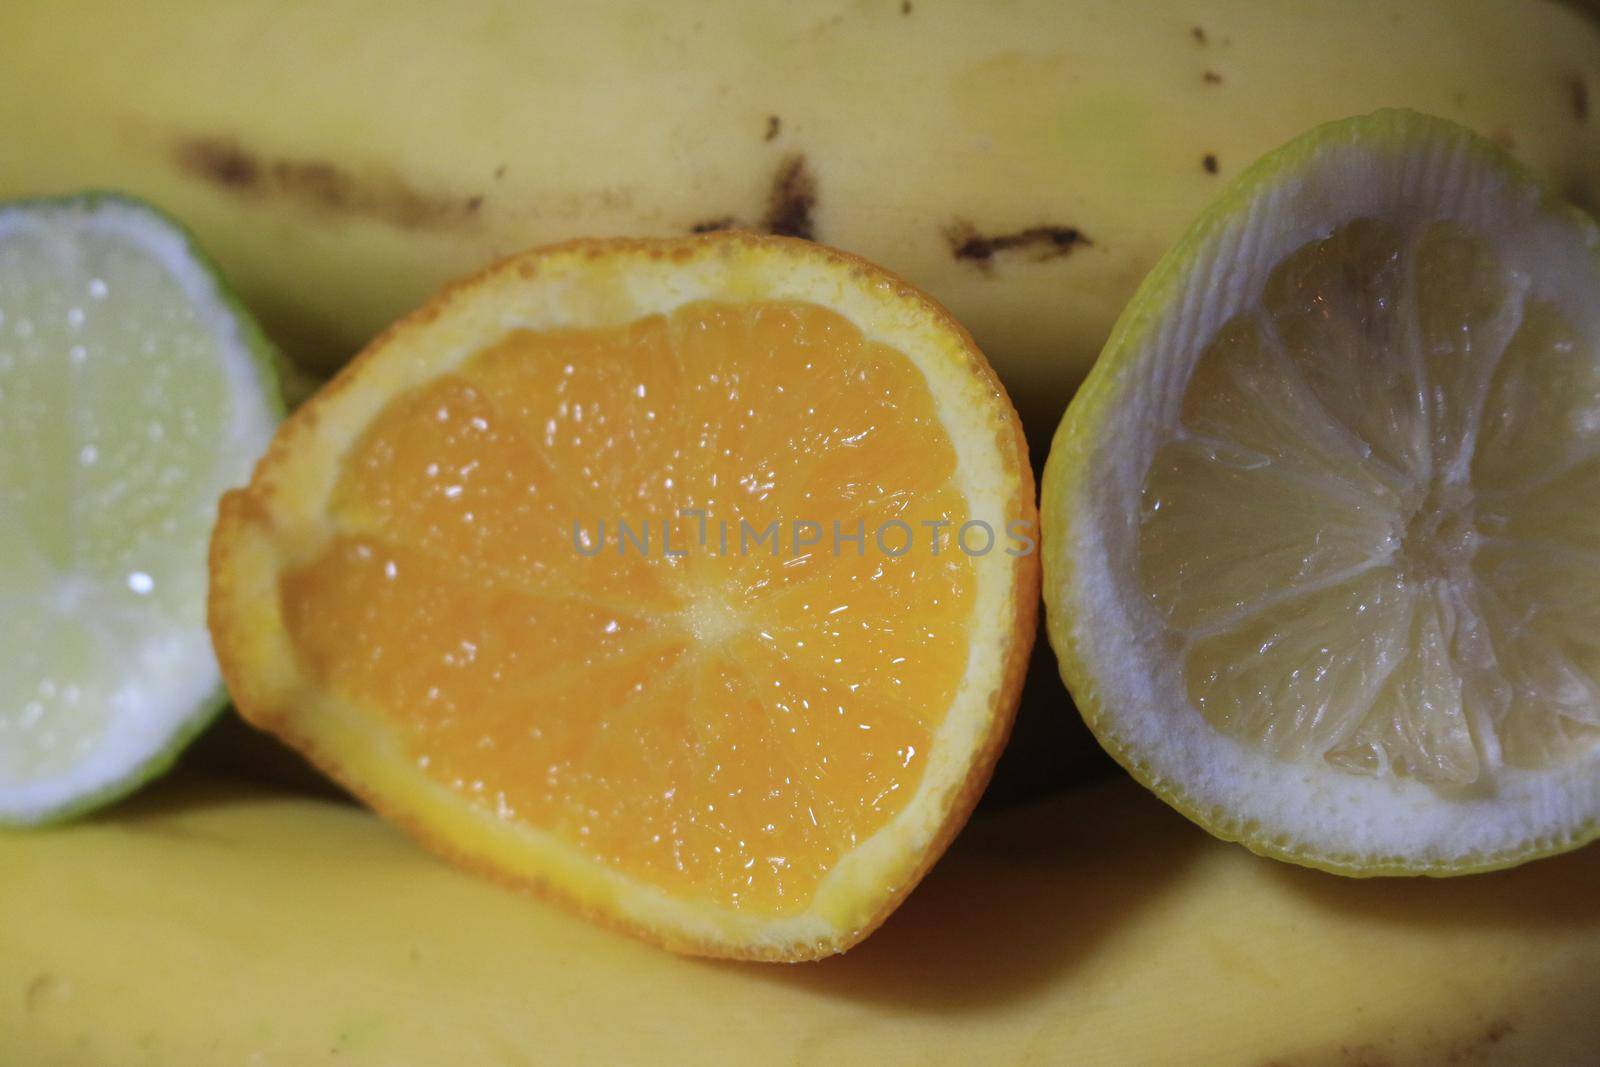 fruit, banana, and various fruits close up photos  by mynewturtle1